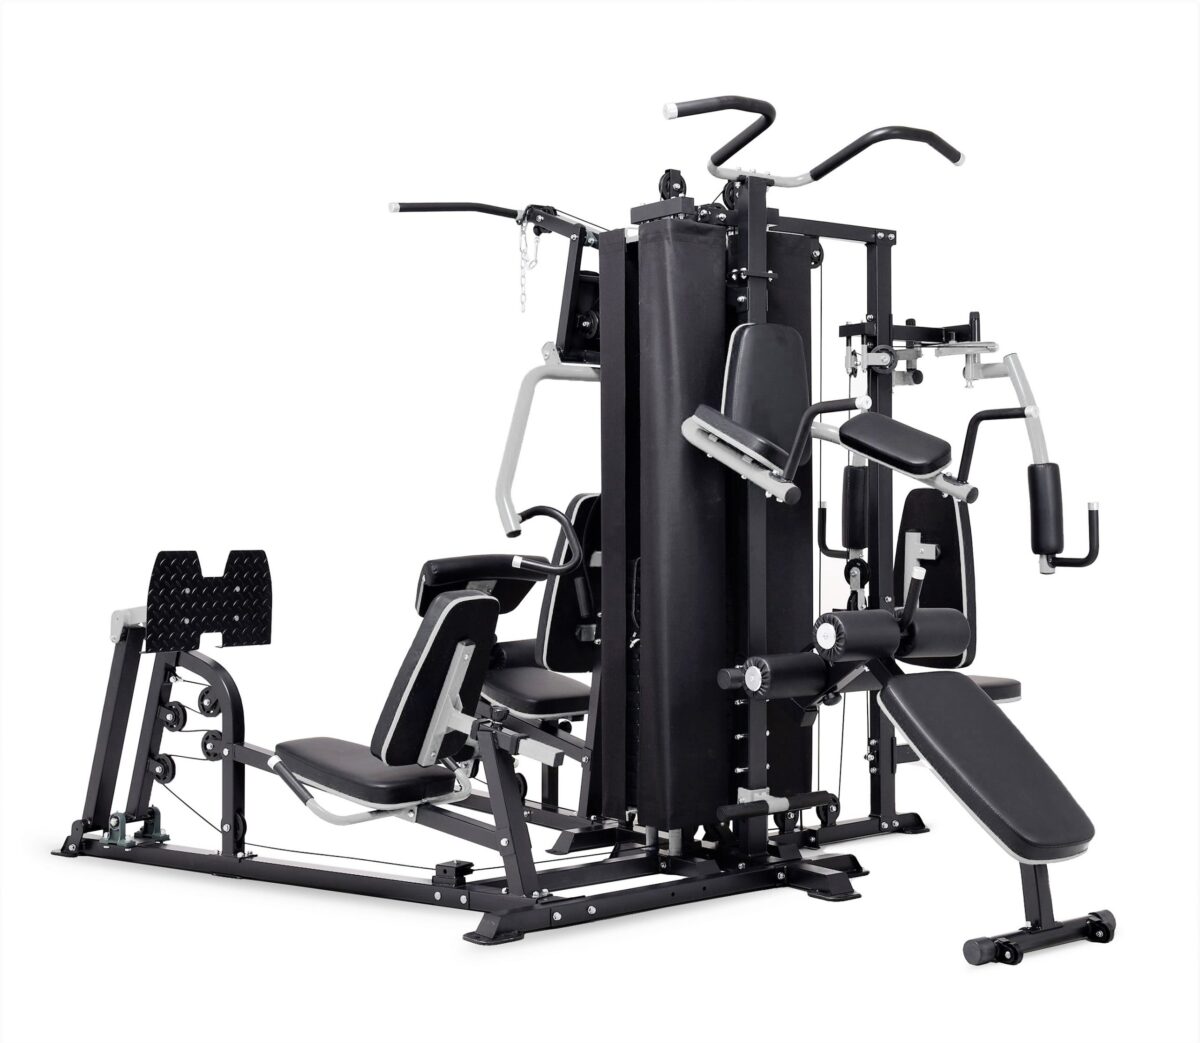 Want Perfect Full Gym Equipment? Shop Via MiM USA